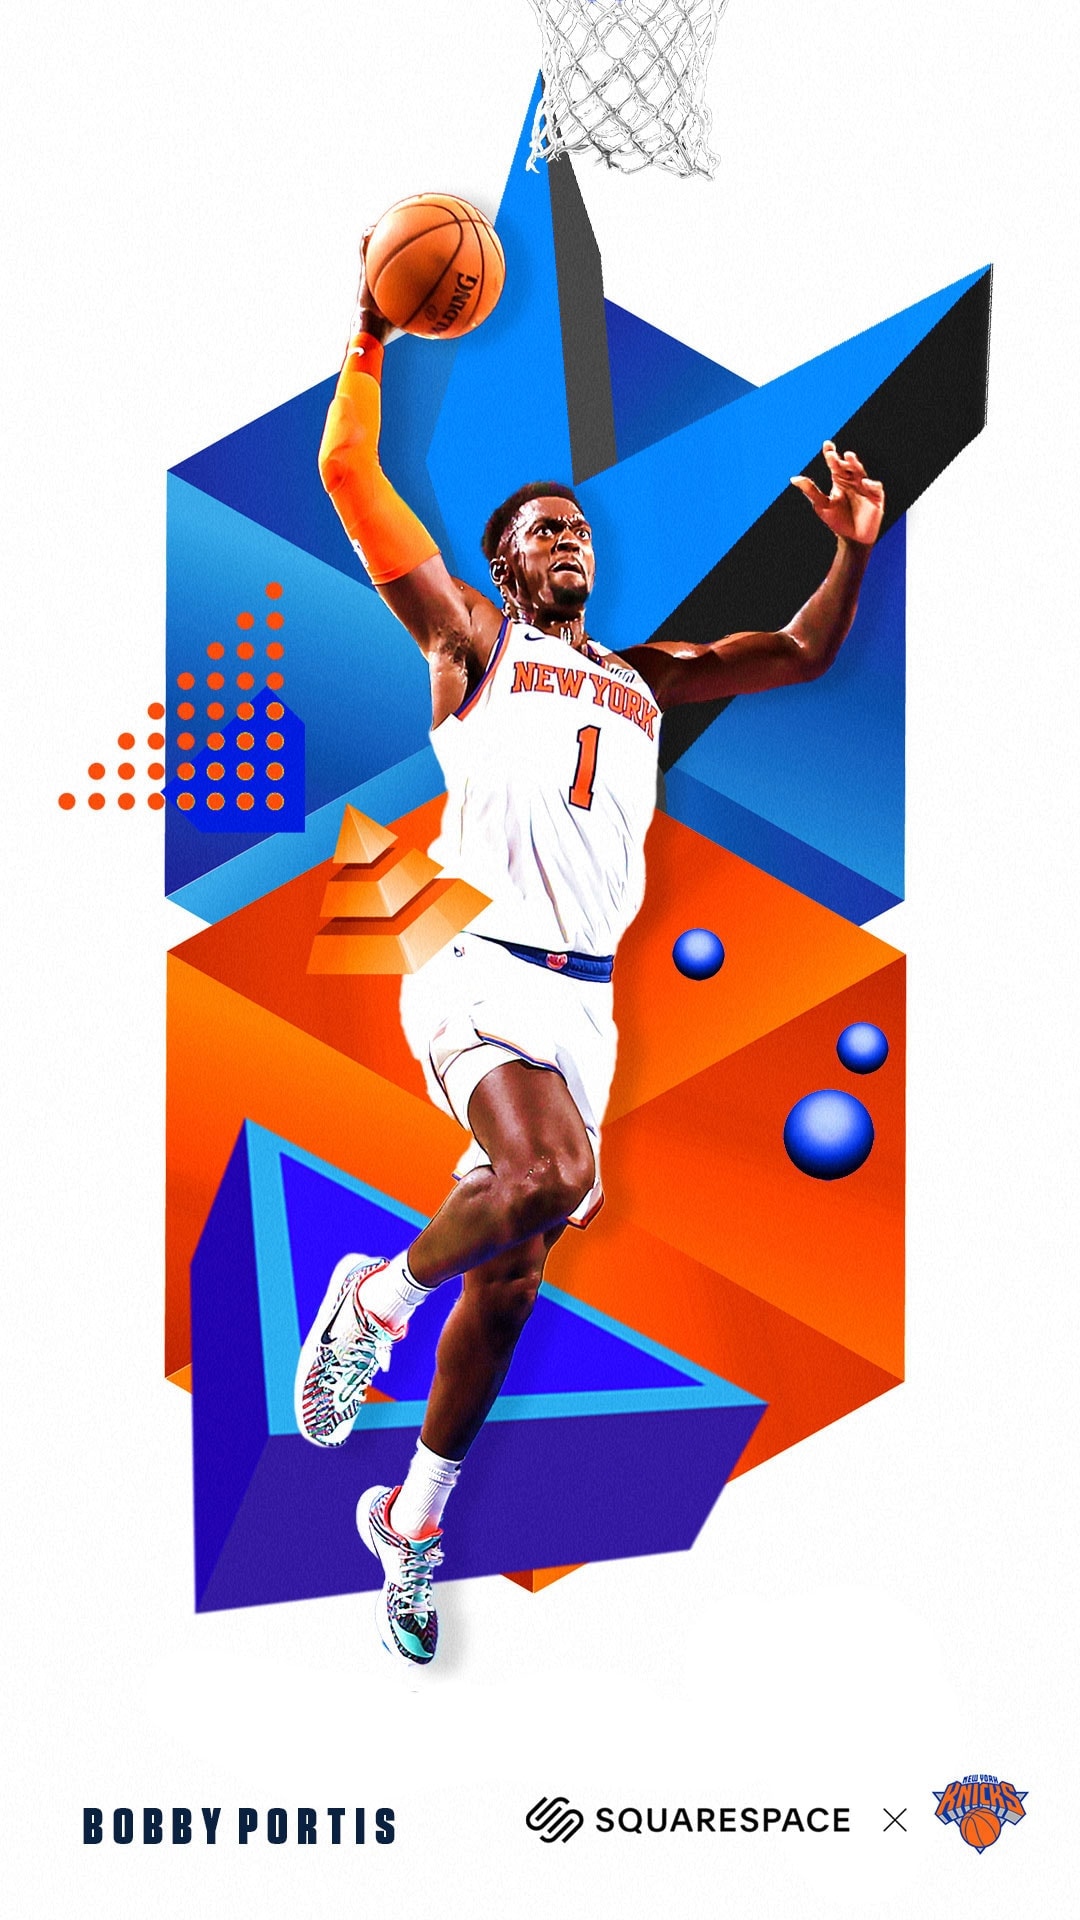 2019 20 Knicks Phone Wallpaper Photo Gallery